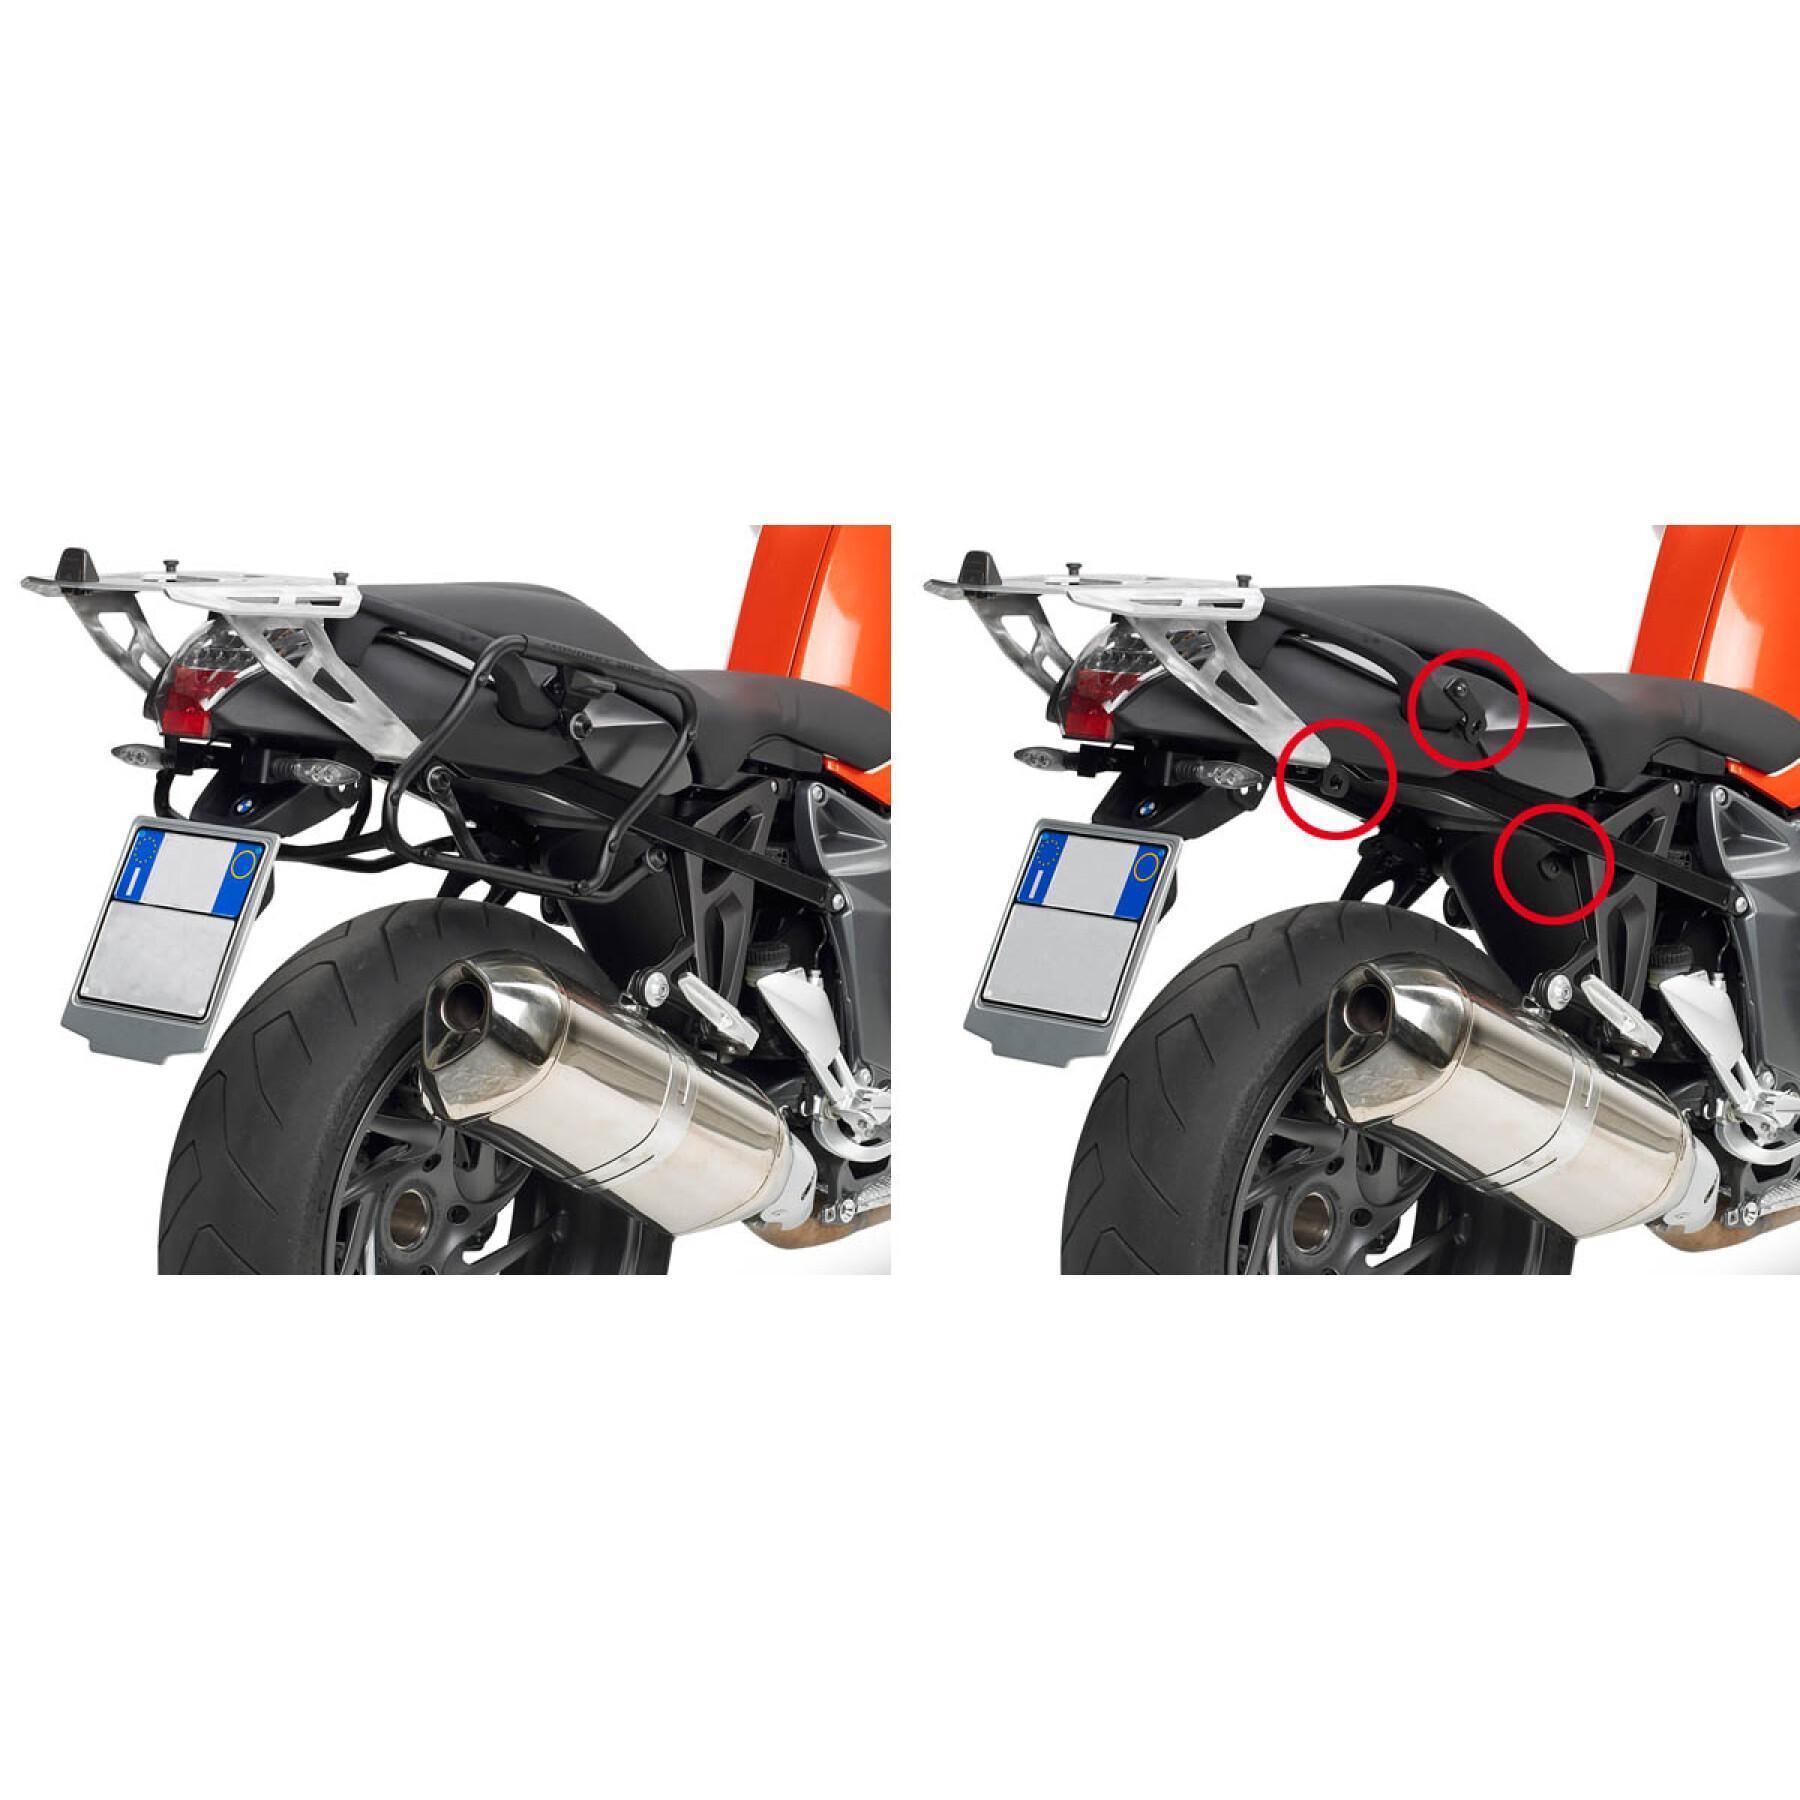 Portavaligia veloce per moto Givi Monokey Side Bmw K 1200 R (05 À 08)/K 1300 R (09 À 16)